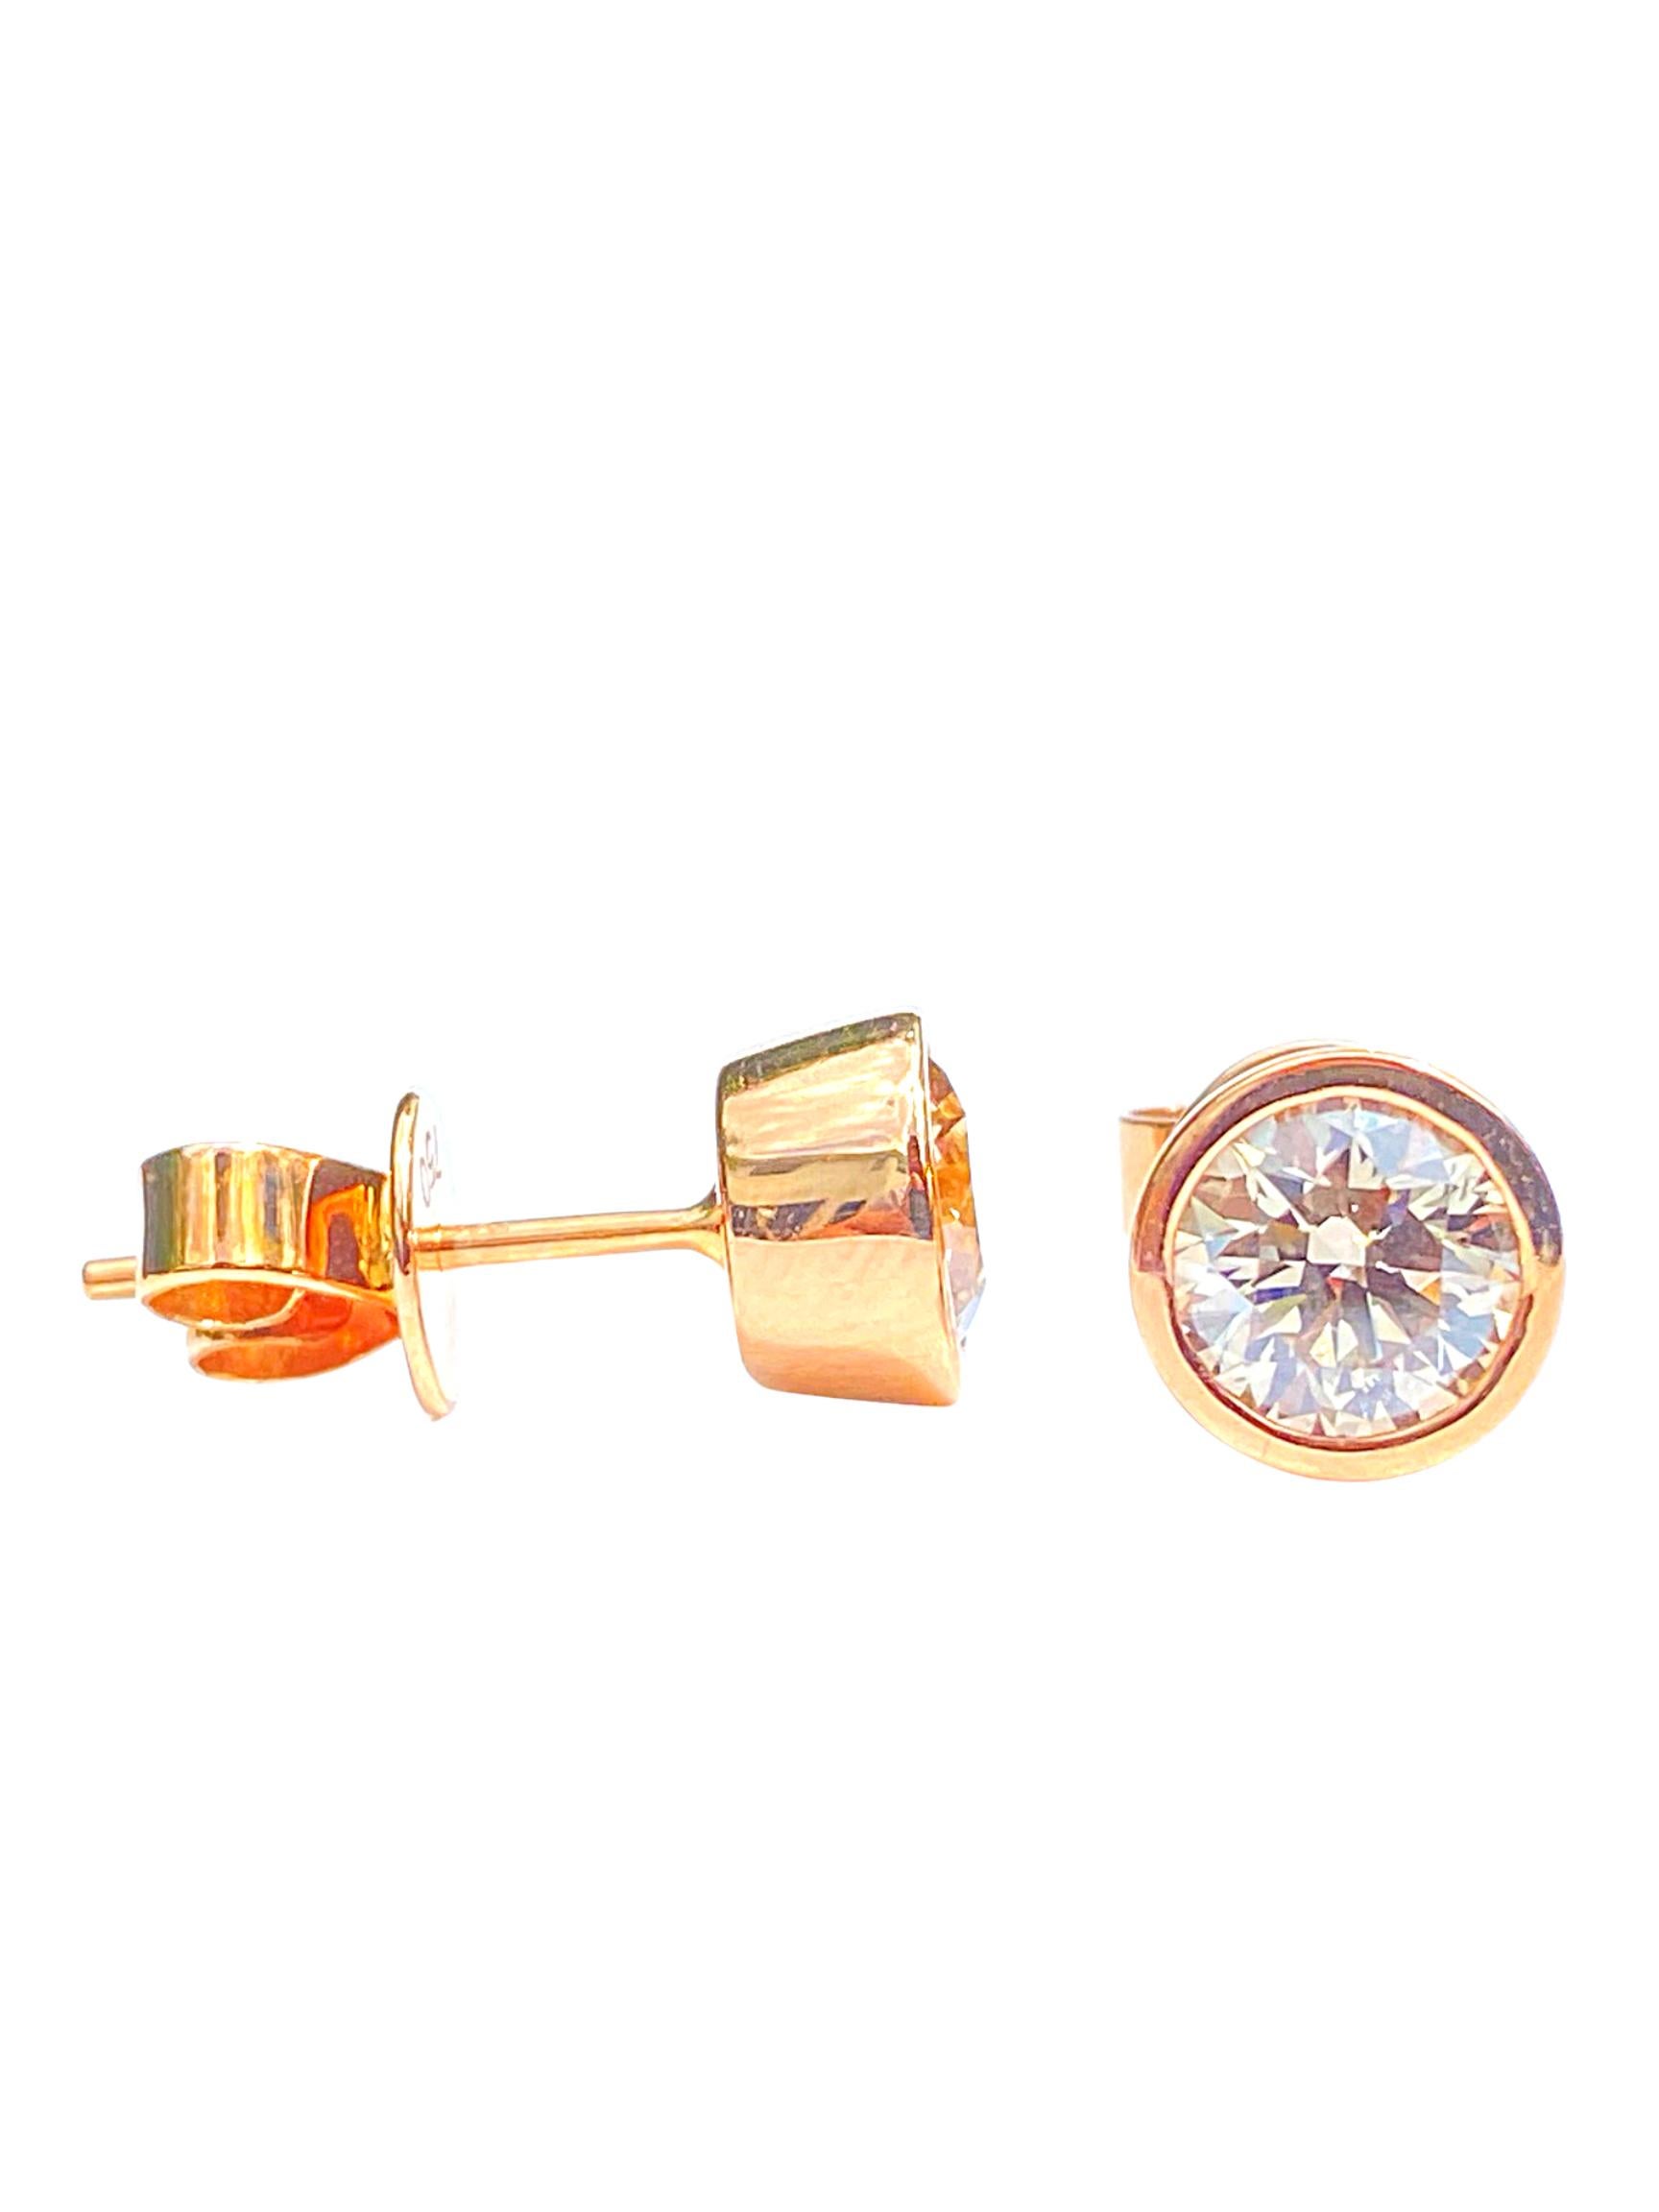 Modern 1.58 Carat Diamond and 18k Rose Gold Stud Earrings Round-Brilliant Cut Diamonds For Sale